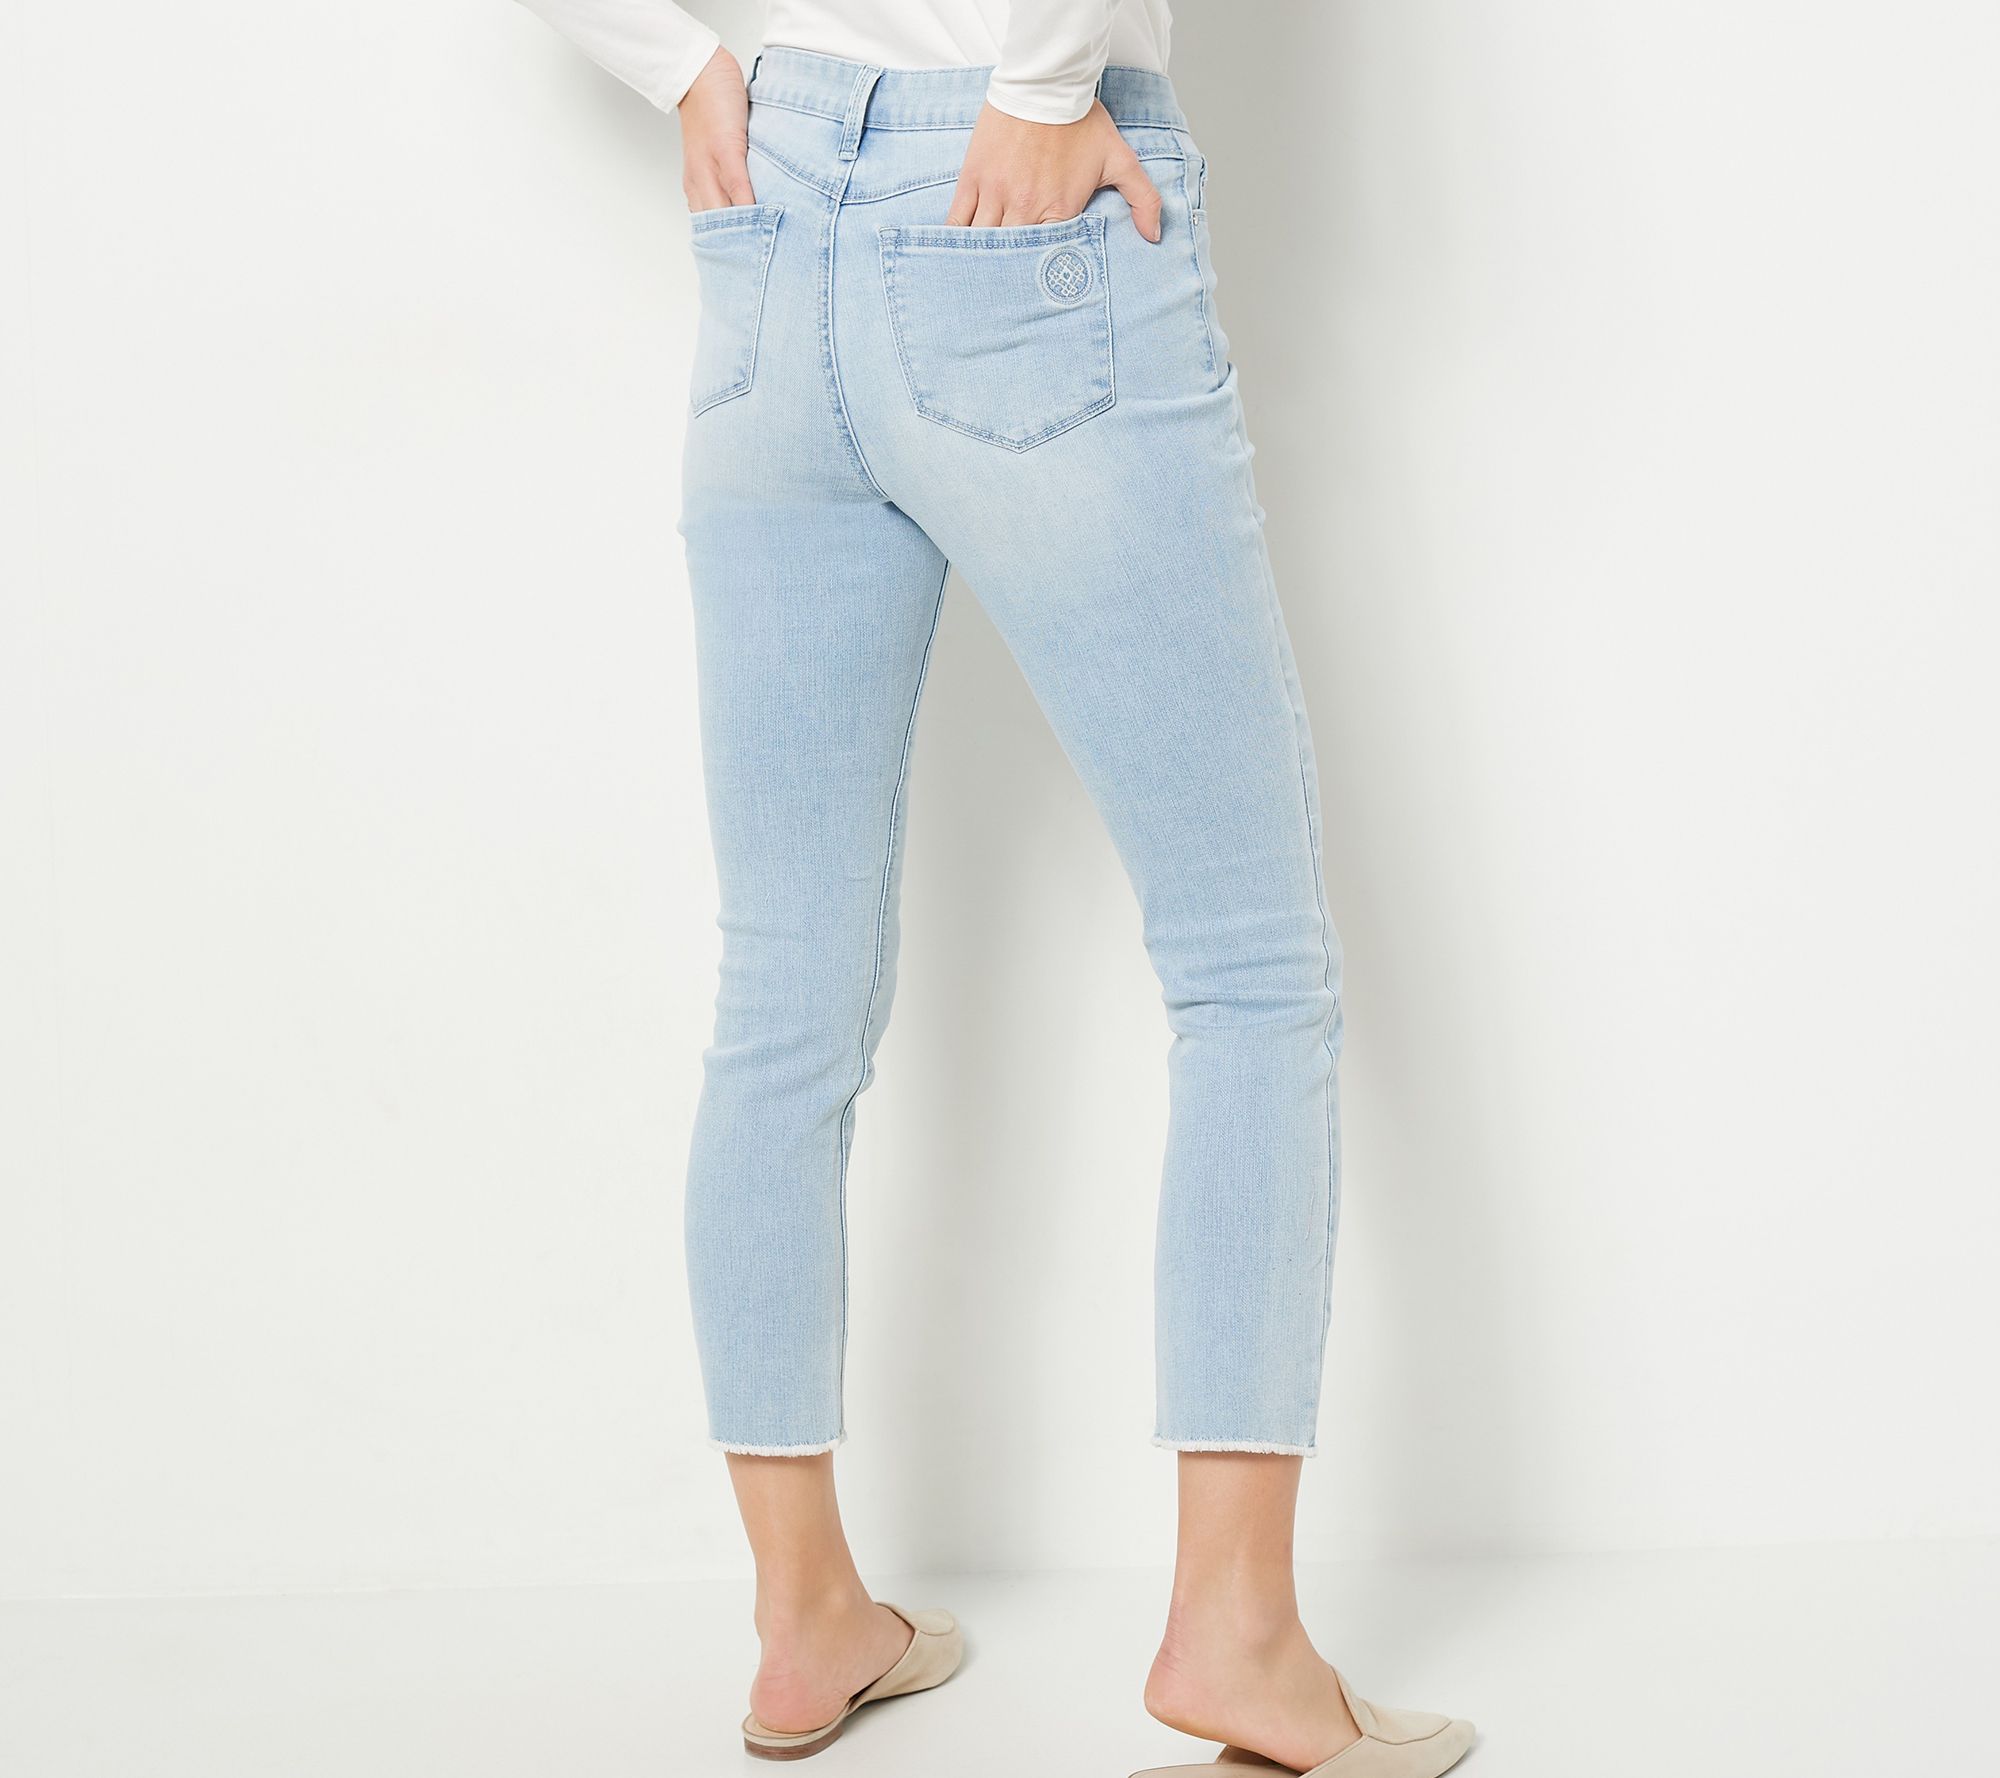 Laurie Felt Petite_Daisy Denim Crop Easy Skinny Jeans with Raw Hem ...